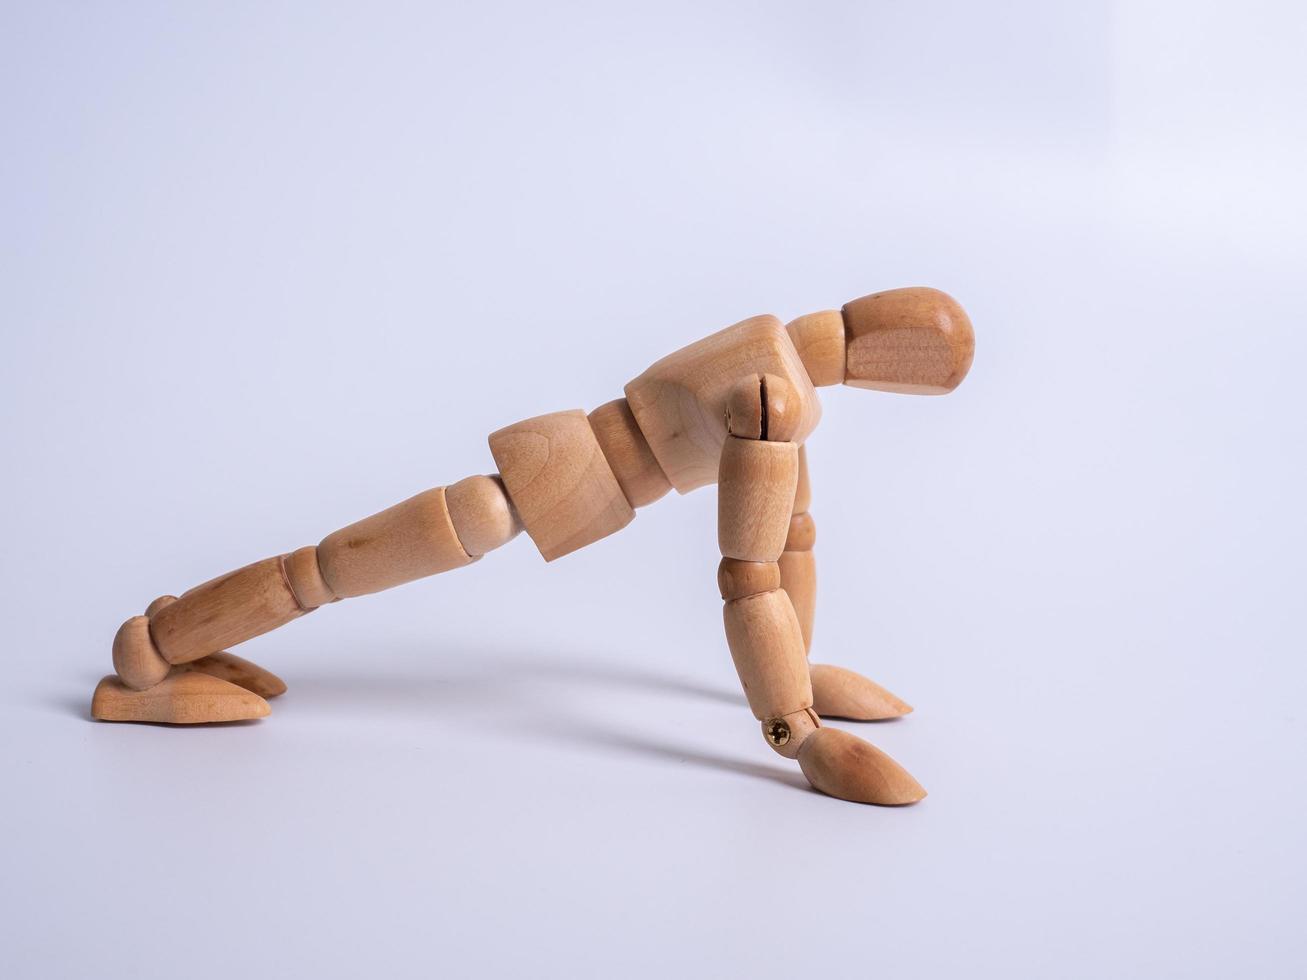 kleine houten pop tijdens push-ups op witte achtergrond foto